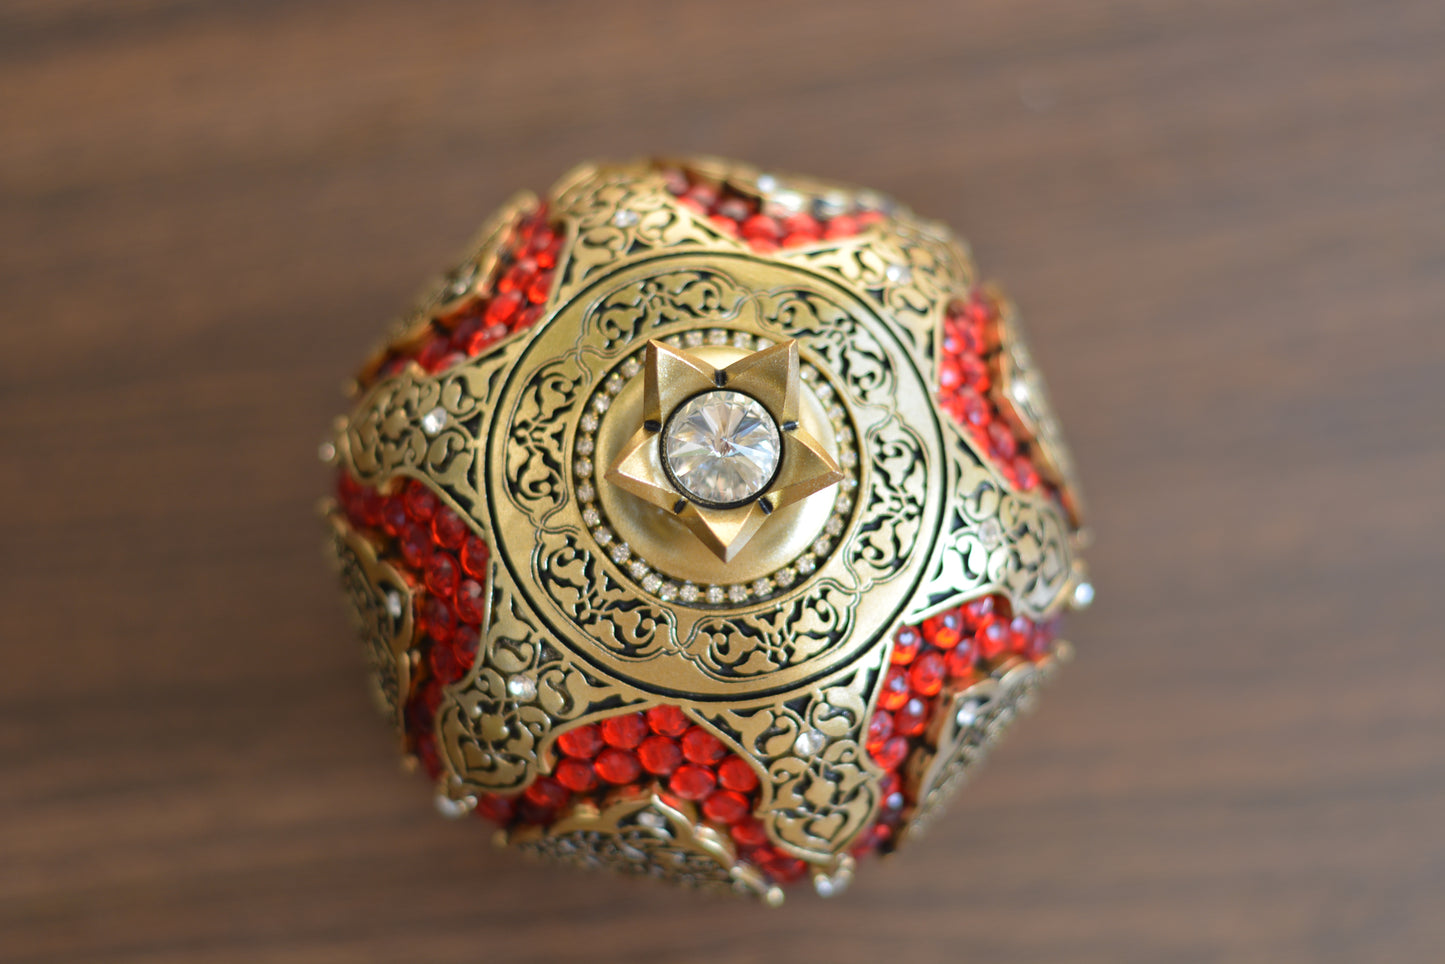 Crystal Pomegranate Islamic Home Decor Piece -5 x 4in